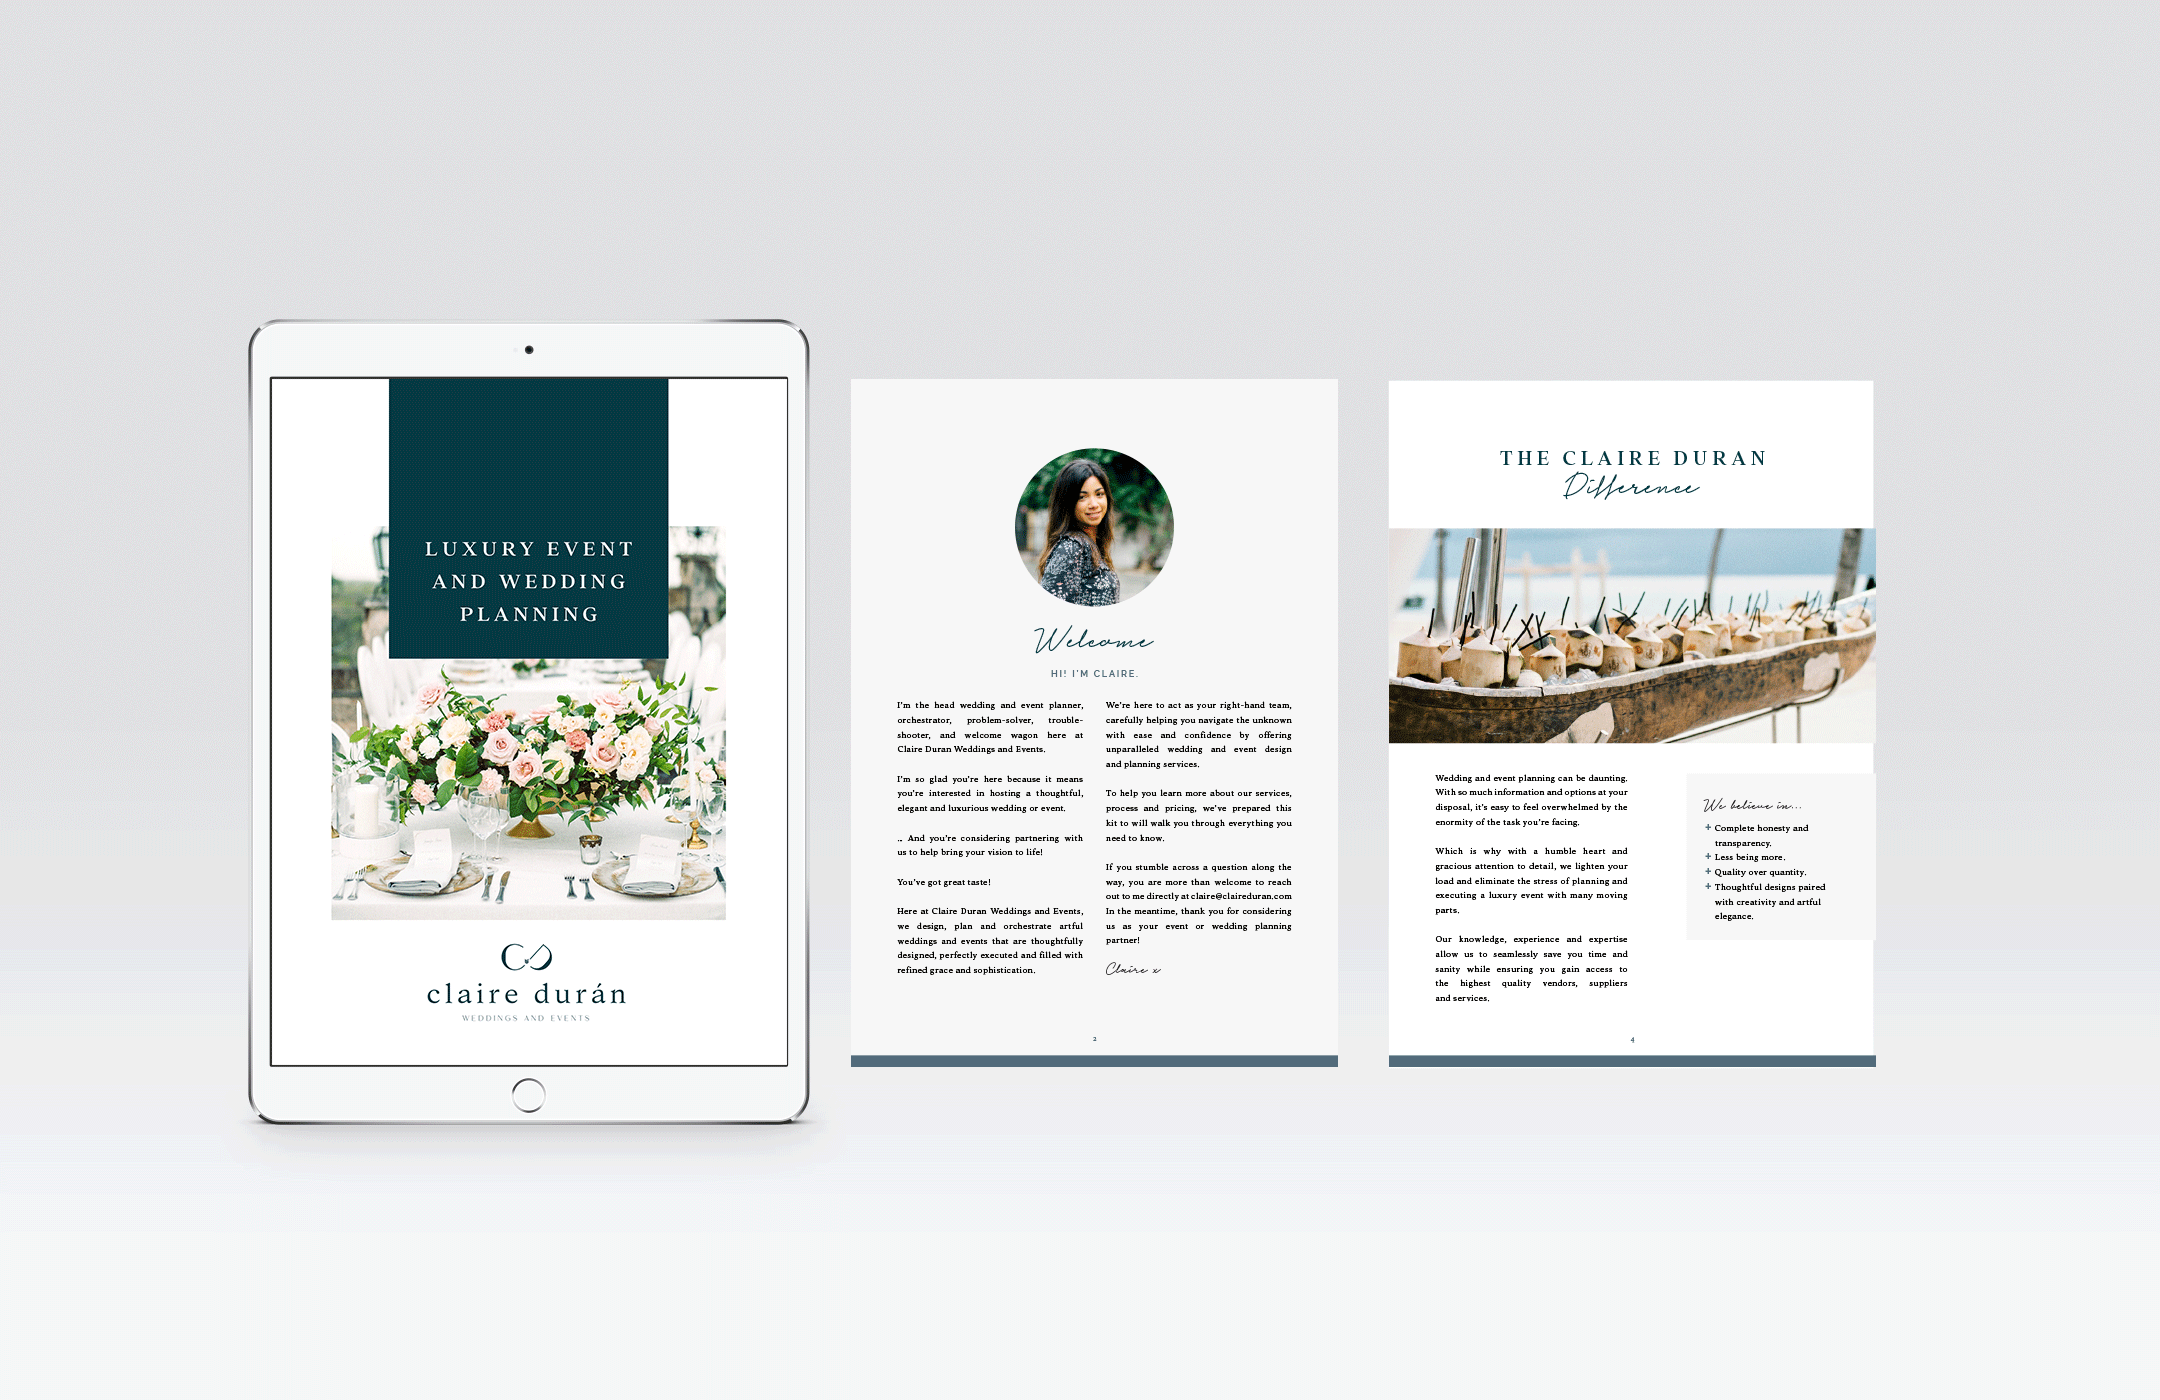 claire duran ebook design pages